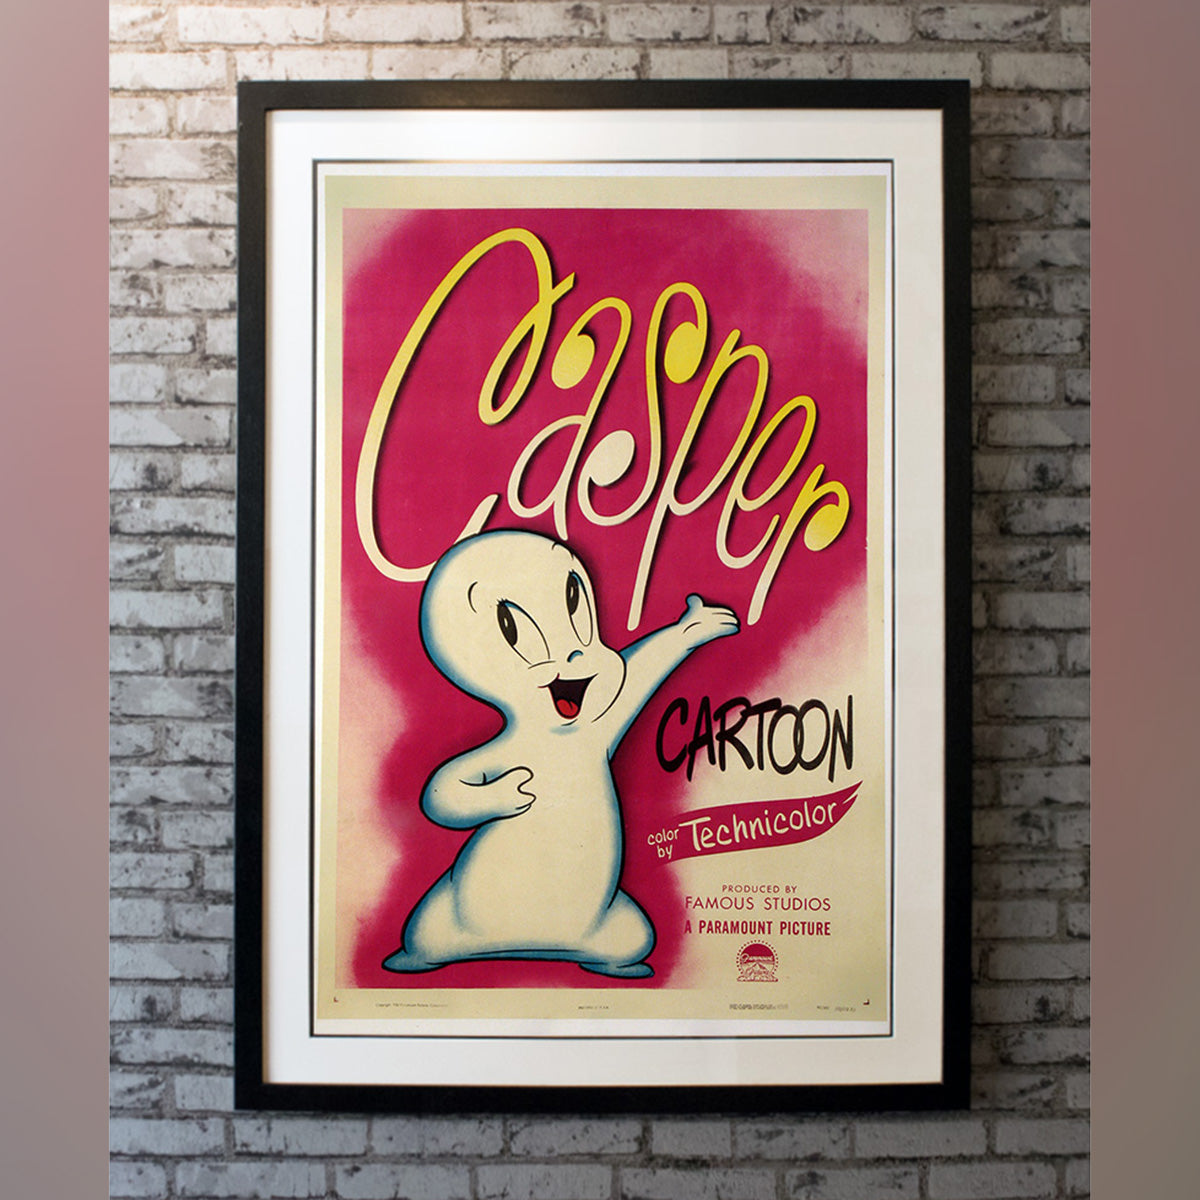 Original Movie Poster of Casper (1950)